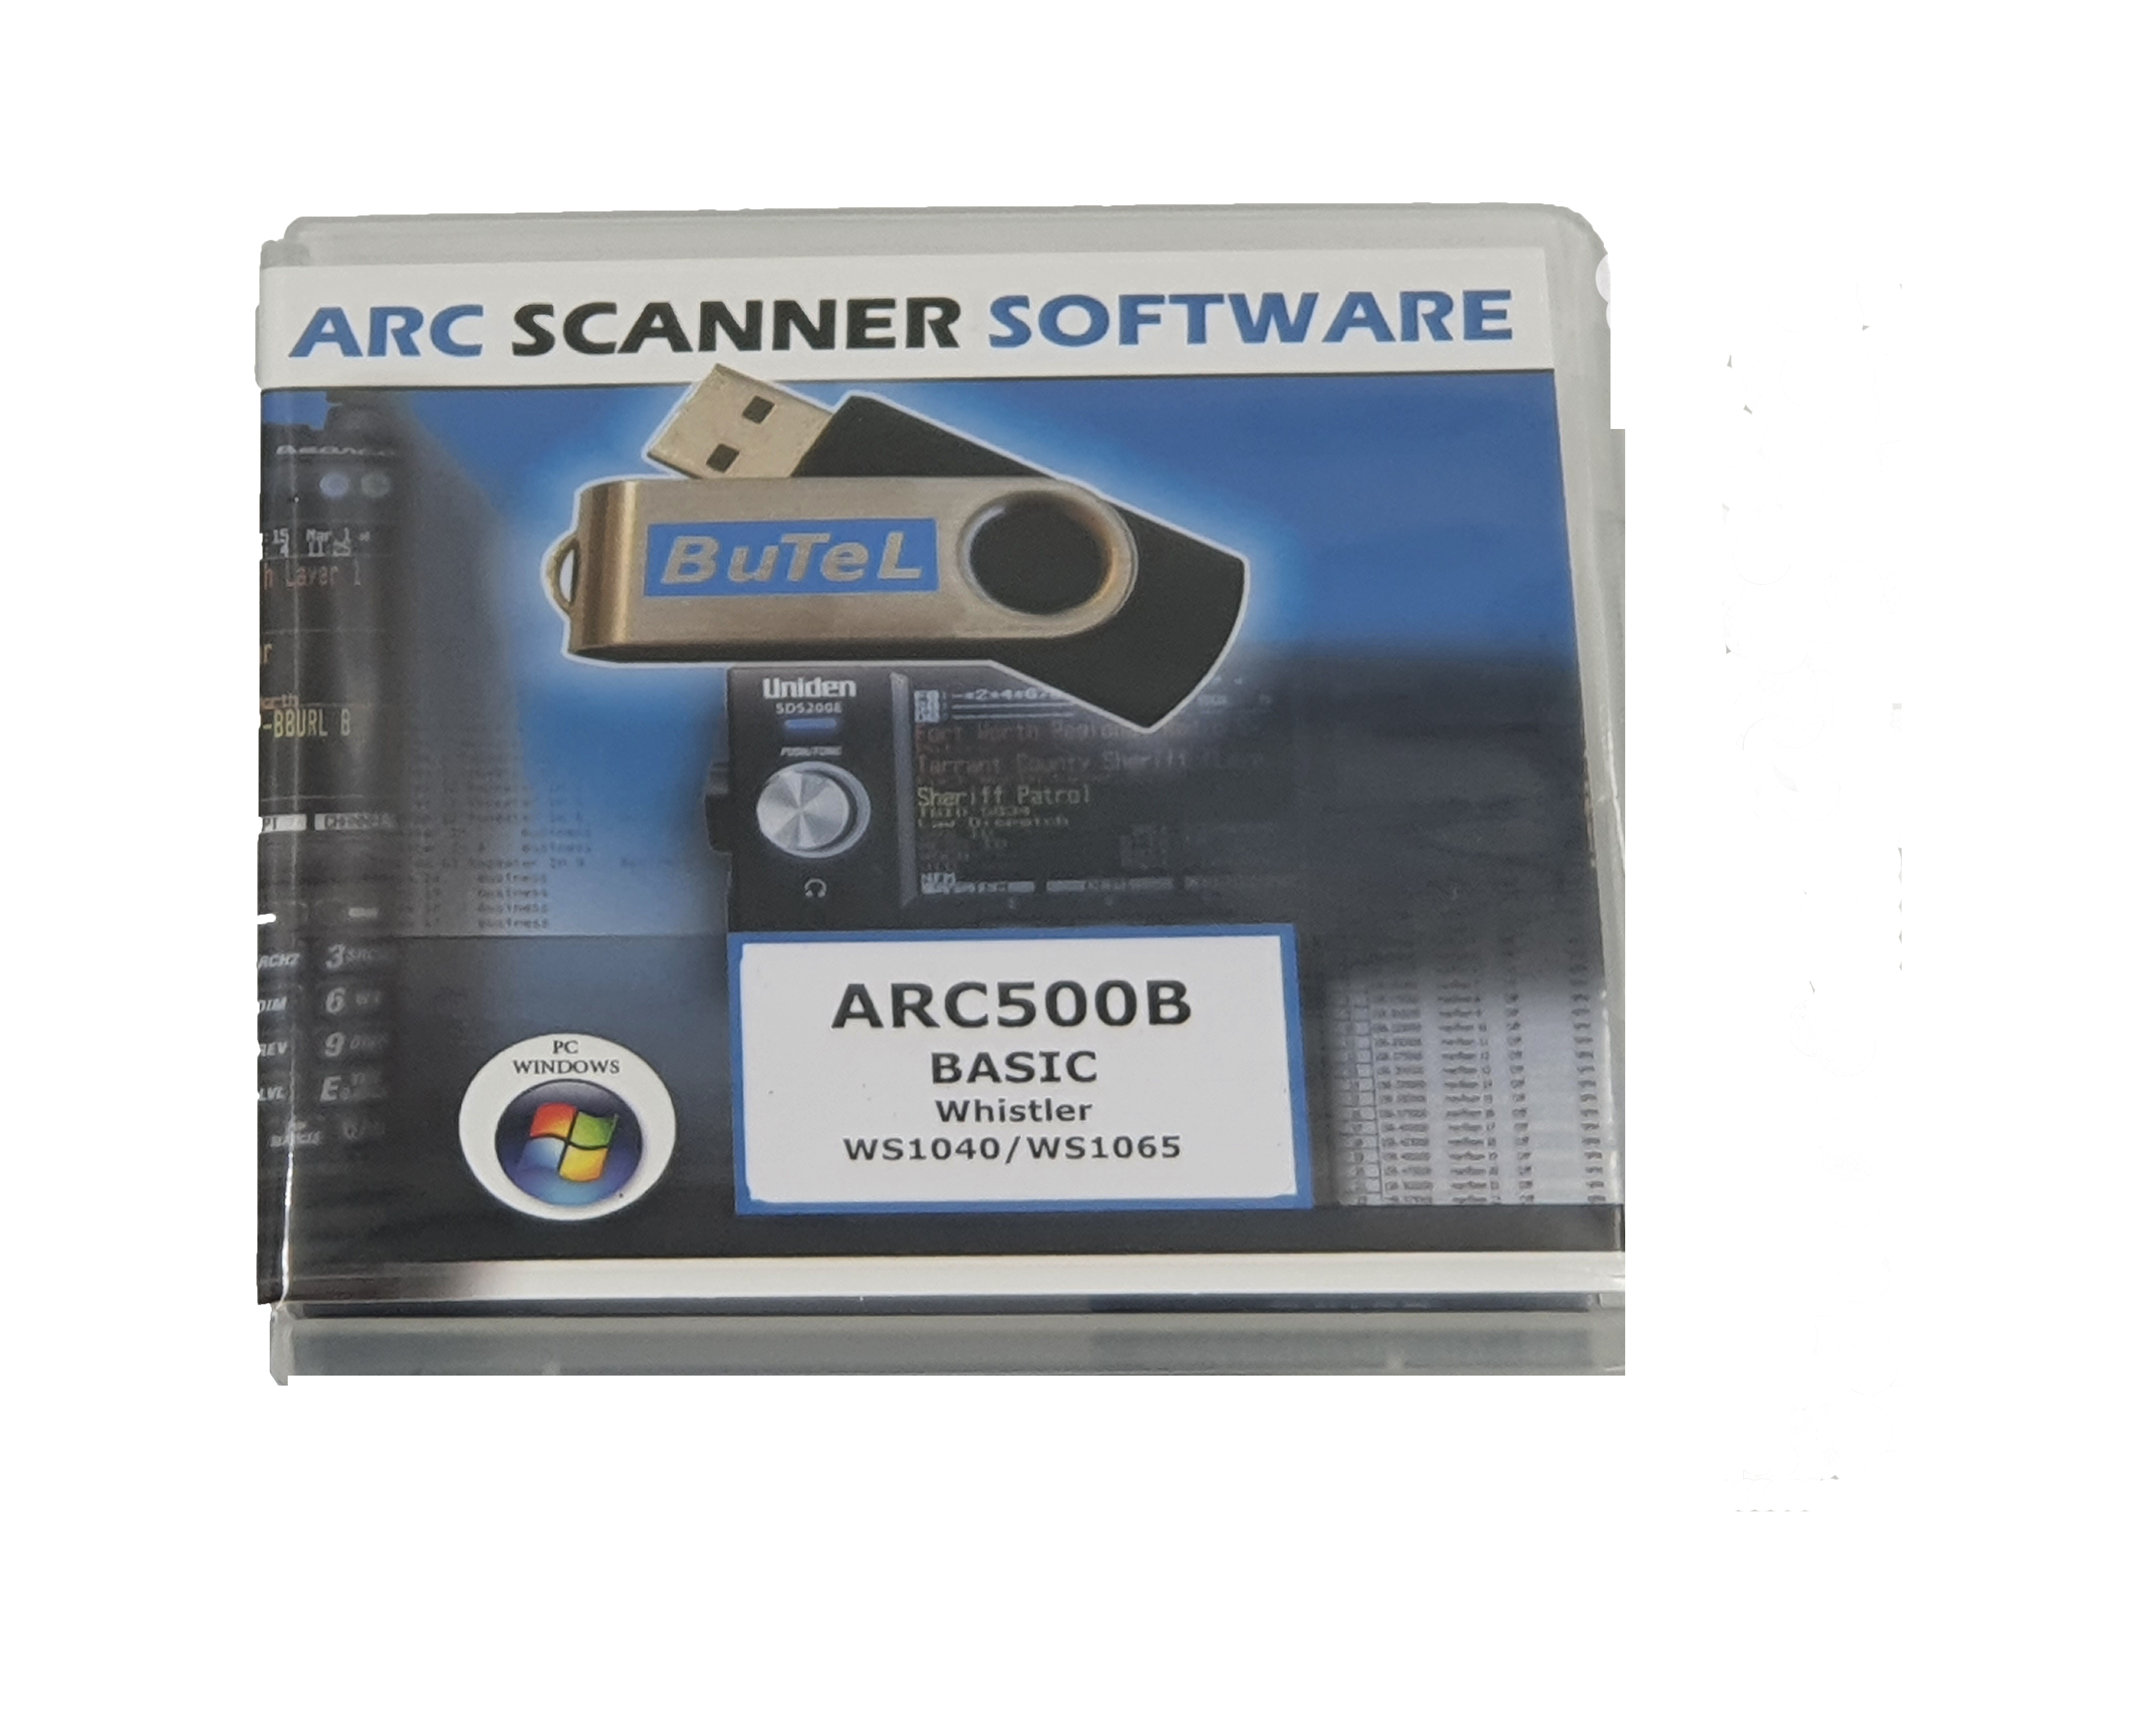 using arc 500 software